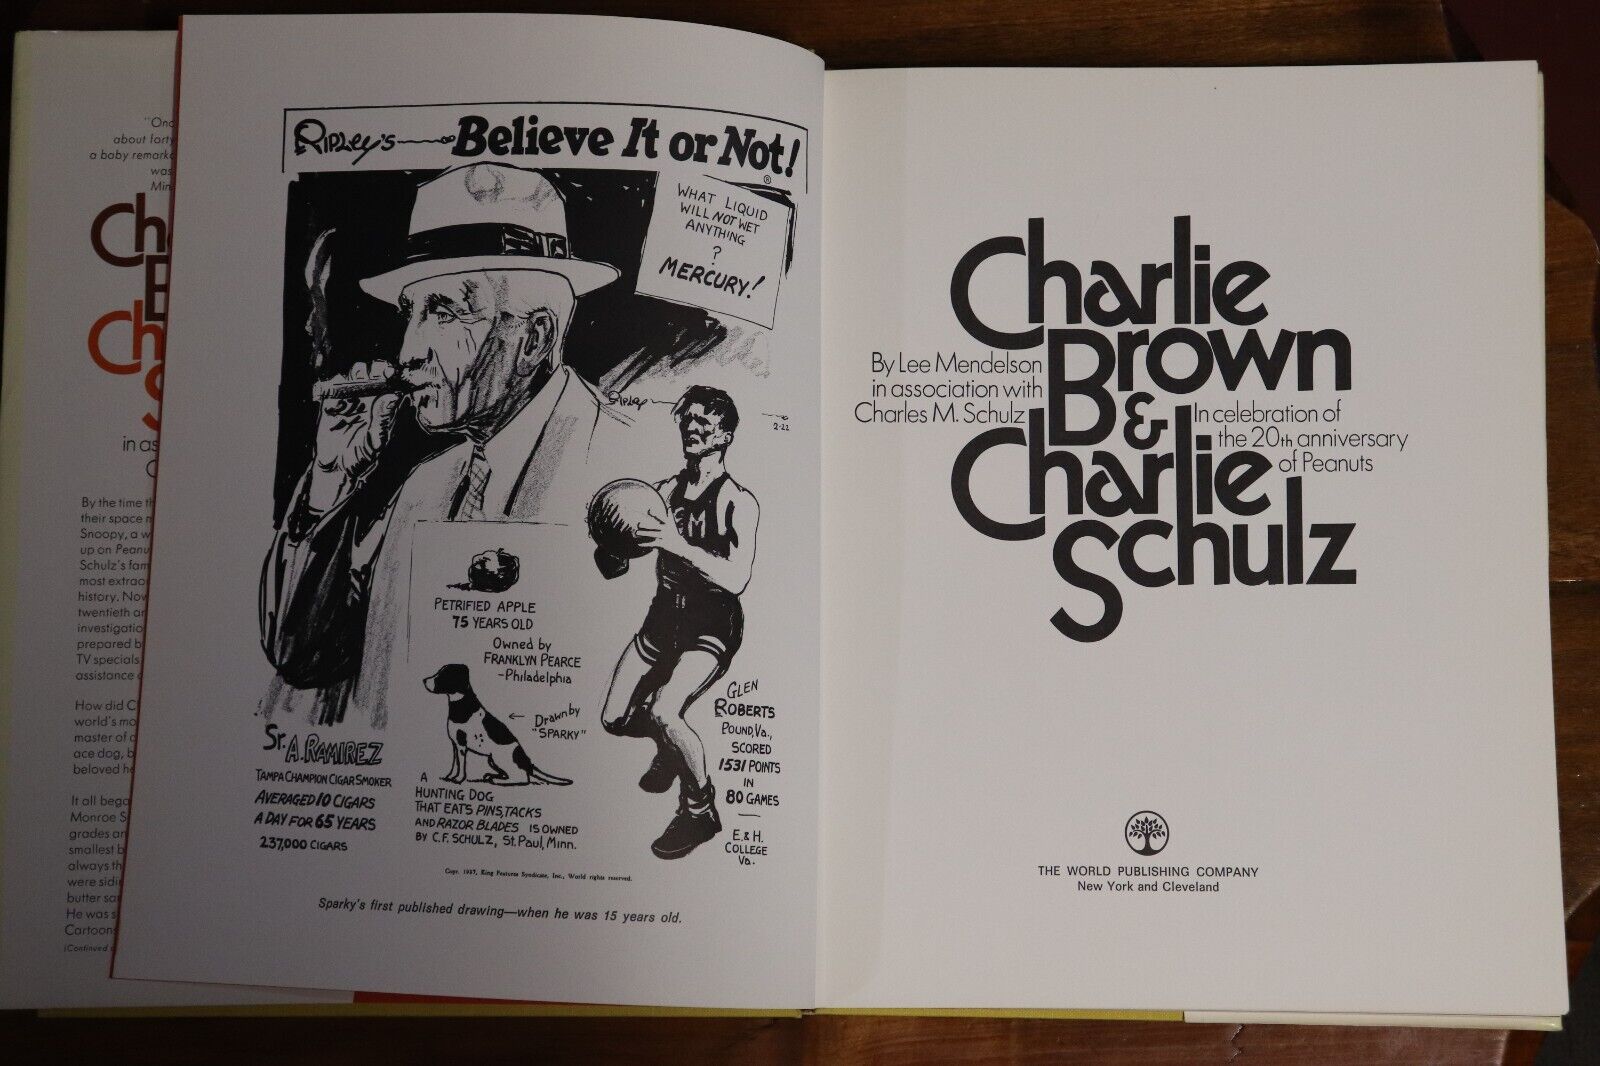 Charlie Brown & Charlie Schulz by L Mendelson - 1970 - Vintage Pop Culture Book - 0